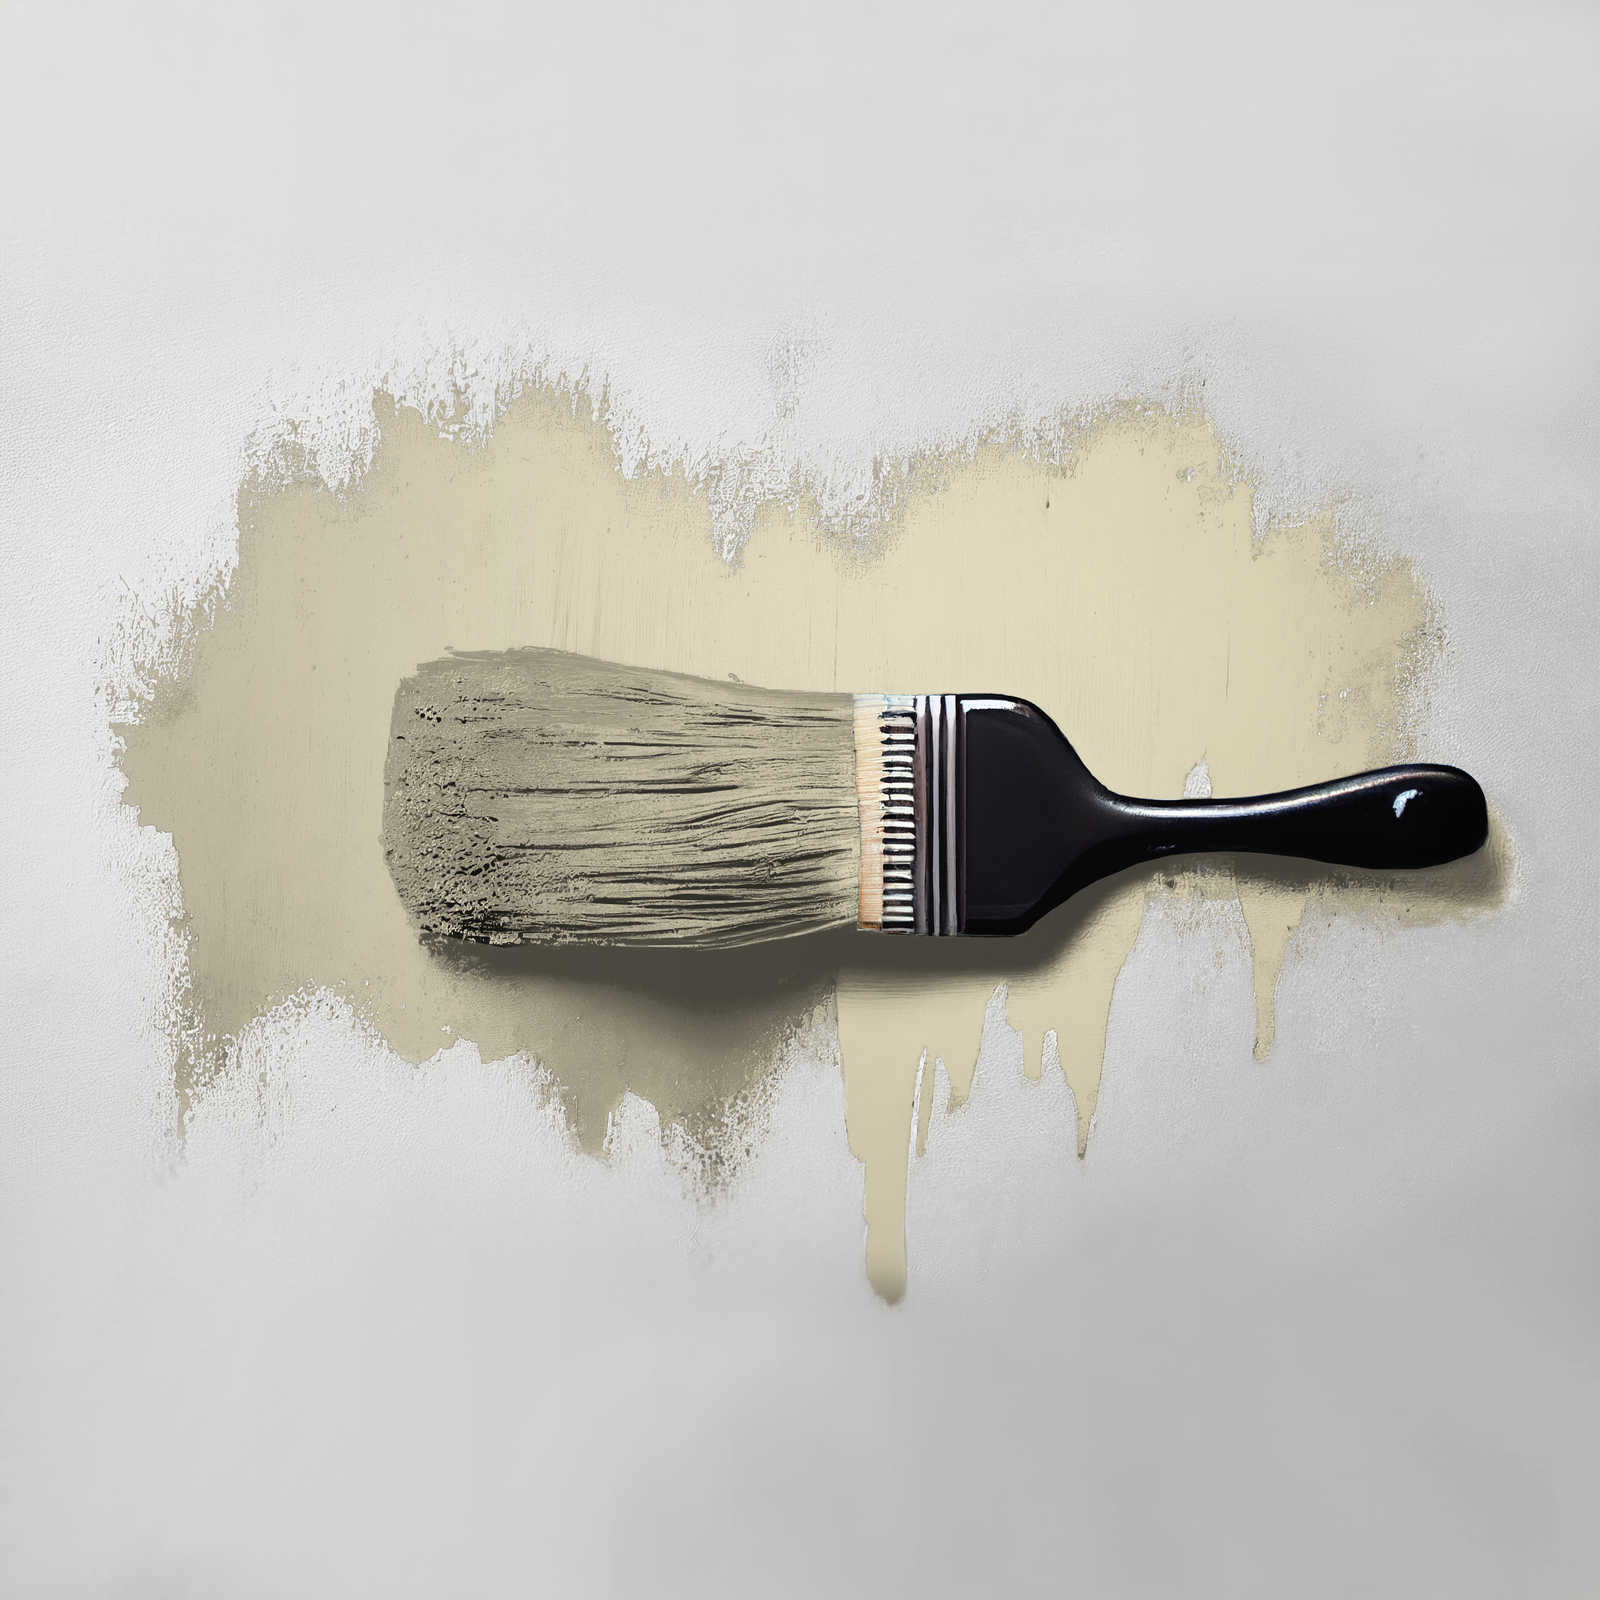             Wall Paint TCK4000 »Natural Mate« in greenish light beige – 2.5 litre
        